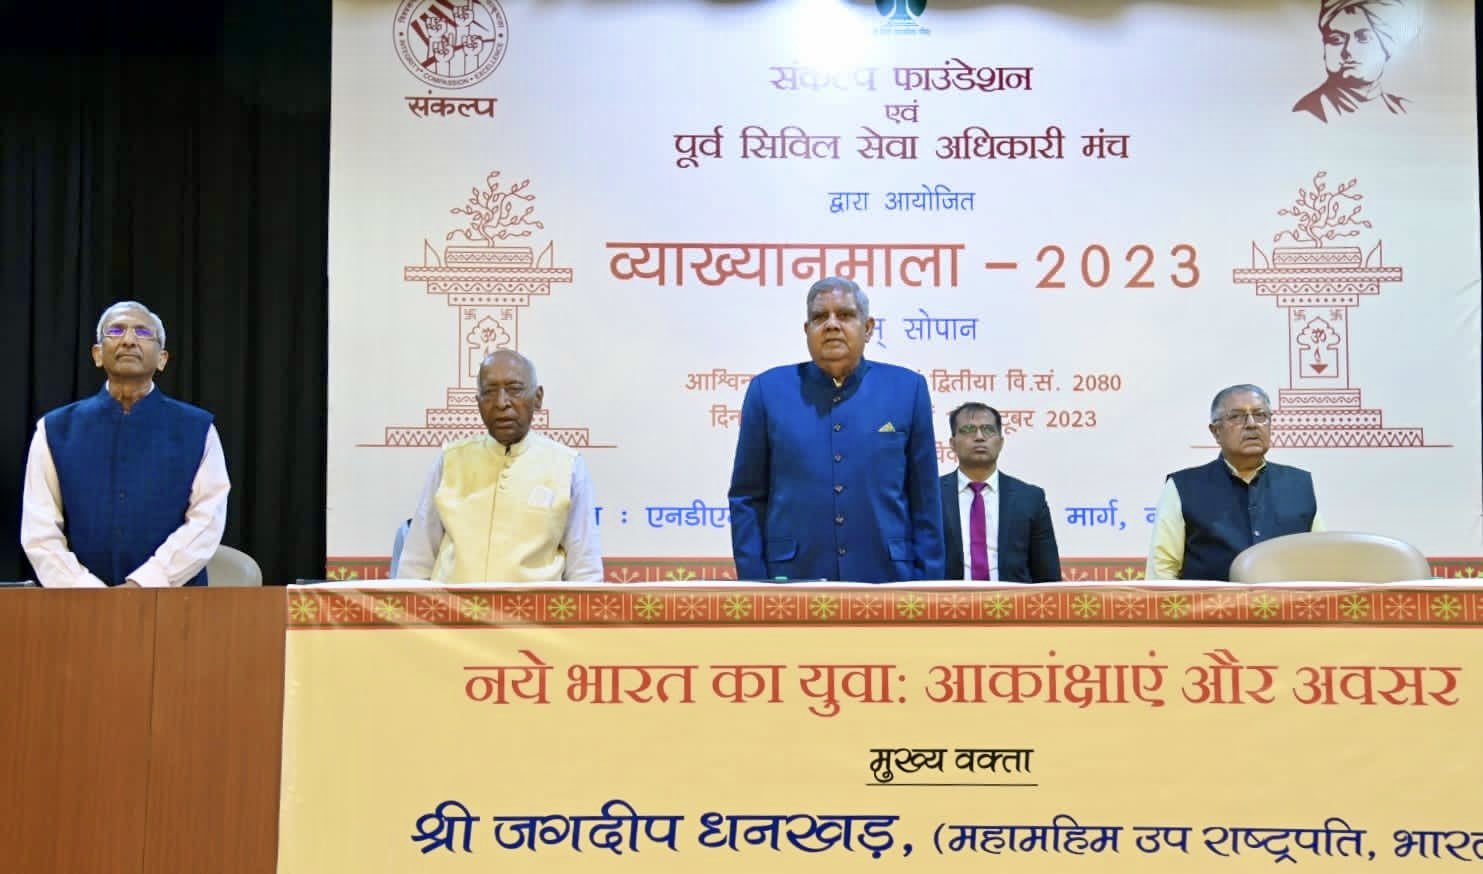 The Vice-President, Shri Jagdeep Dhankhar at the “Nawam Samkalp Vyakhyan Mala” organized by Samkalp Foundation Trust in New Delhi on September 30, 2023.